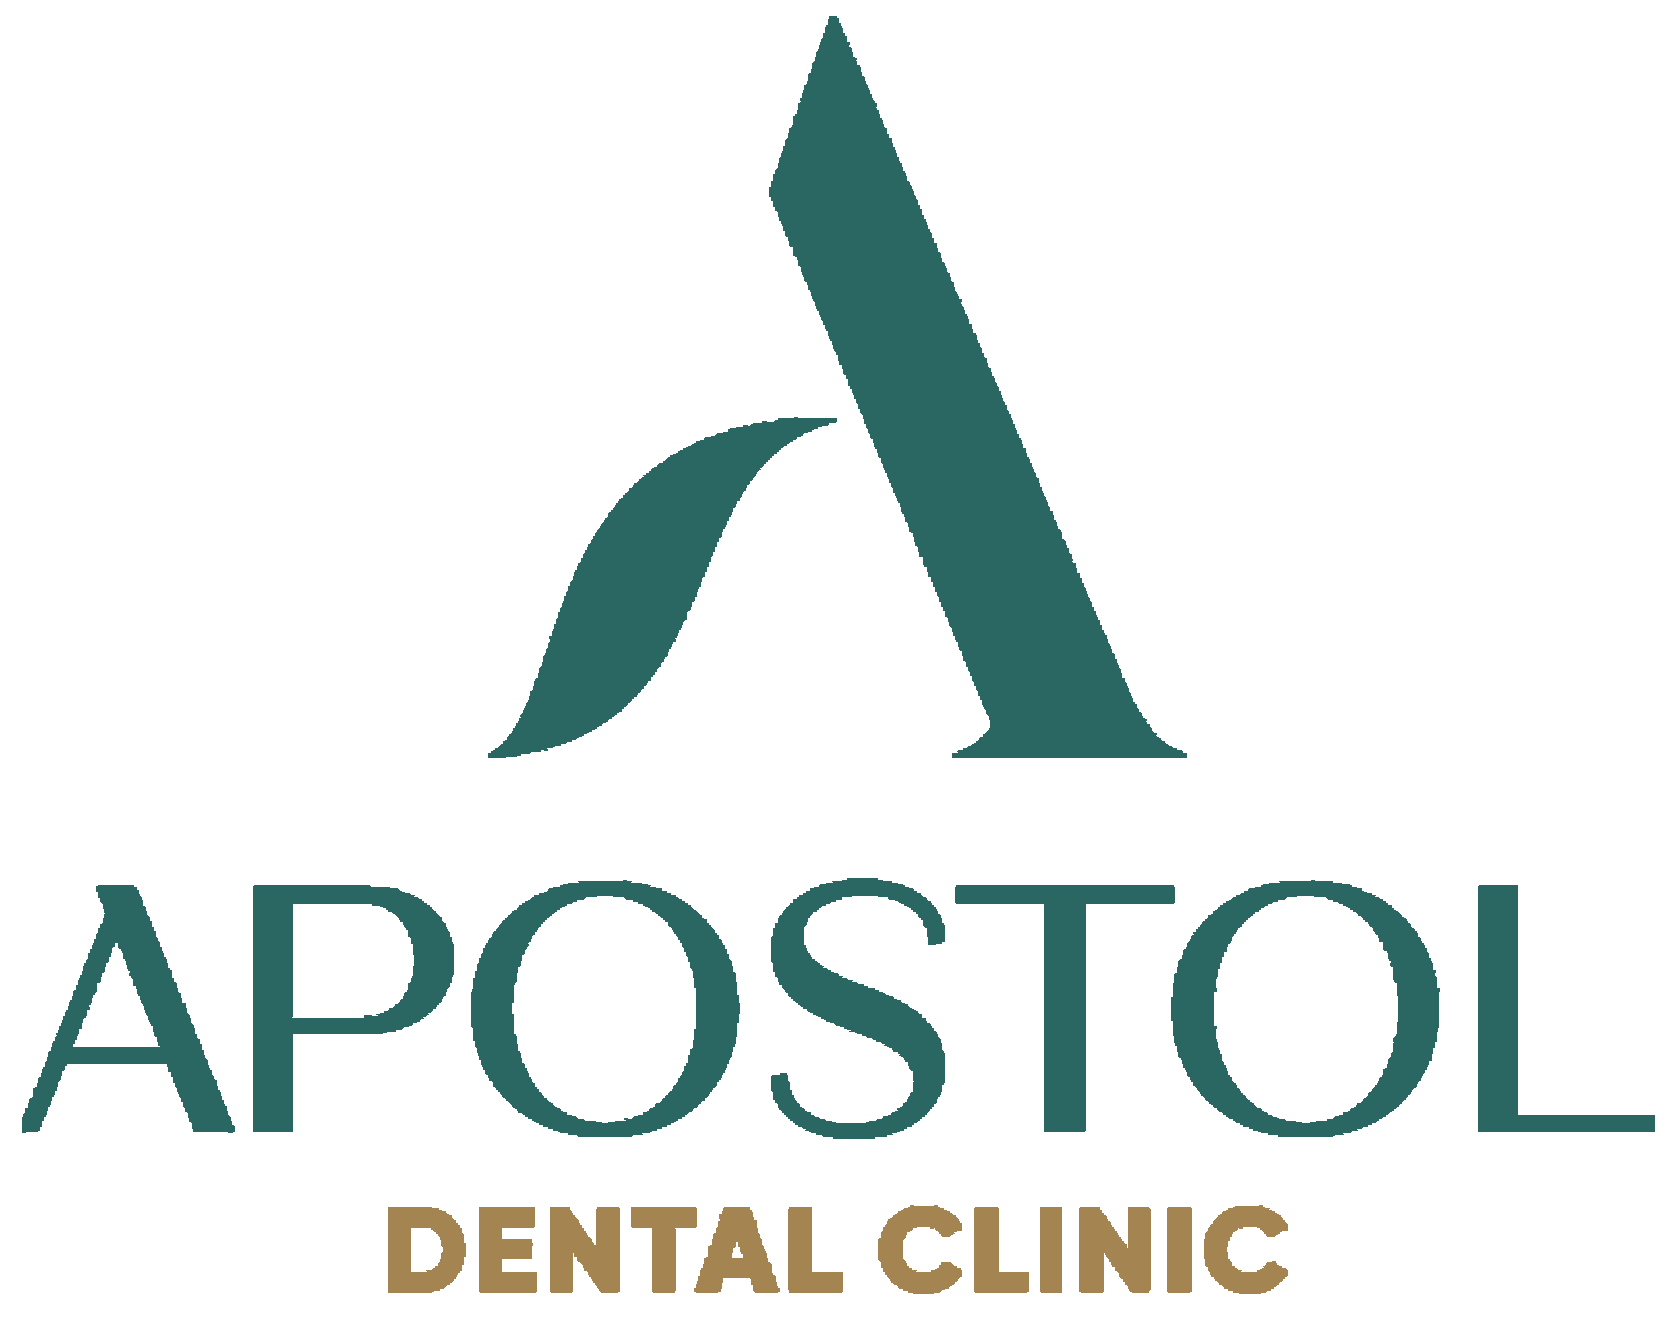 Apostol Dental Clinic